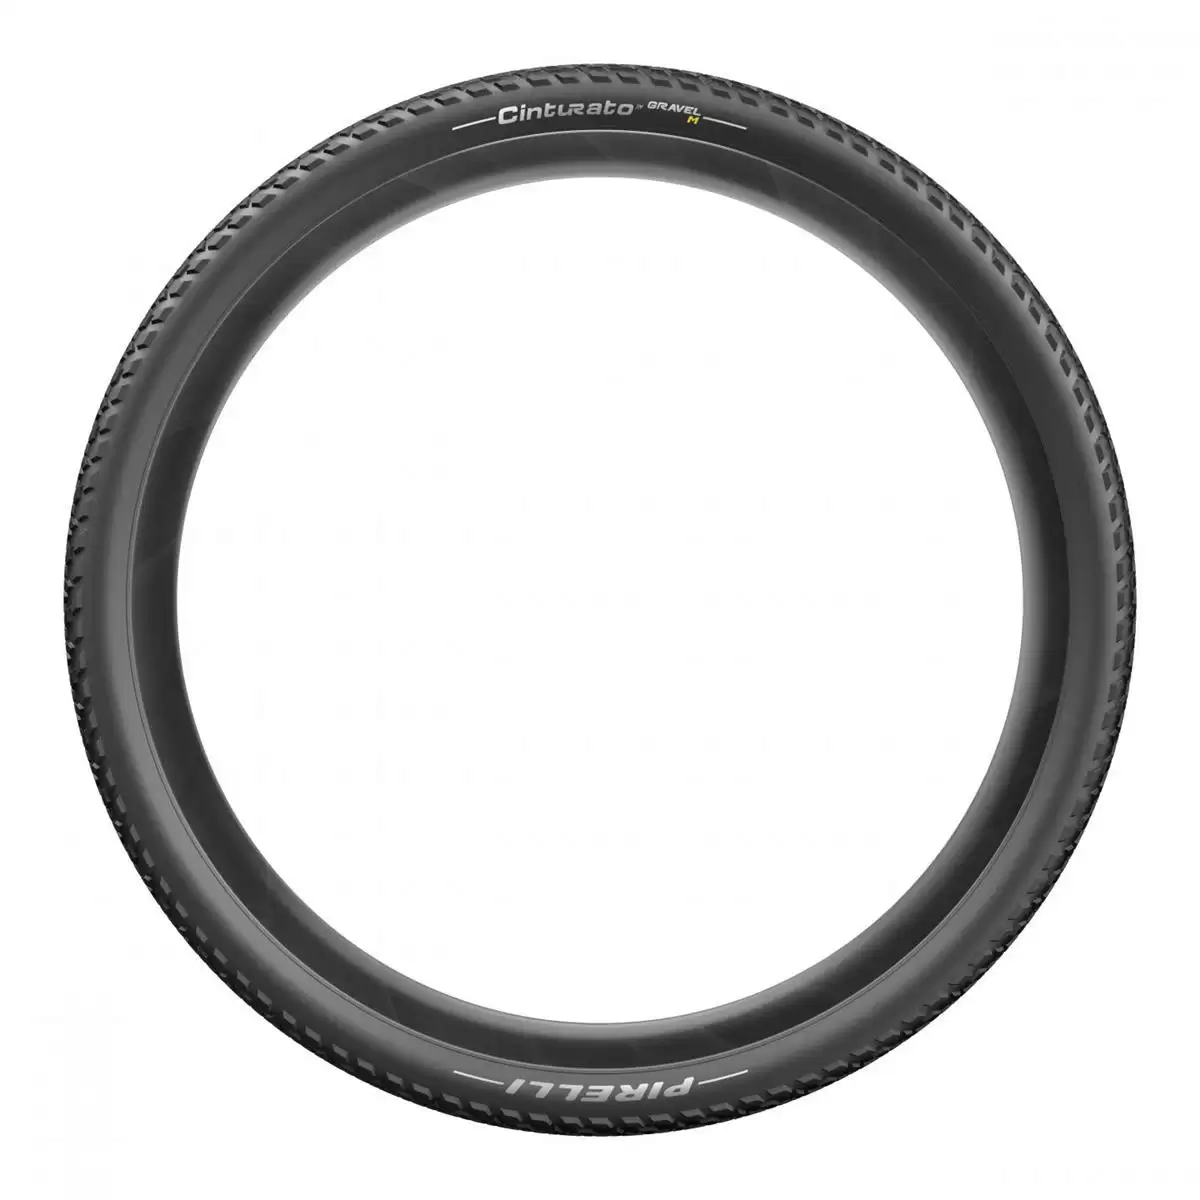 Tire Cinturato Gravel Mixed Terrain 700x35c Tubeless Ready Black #3